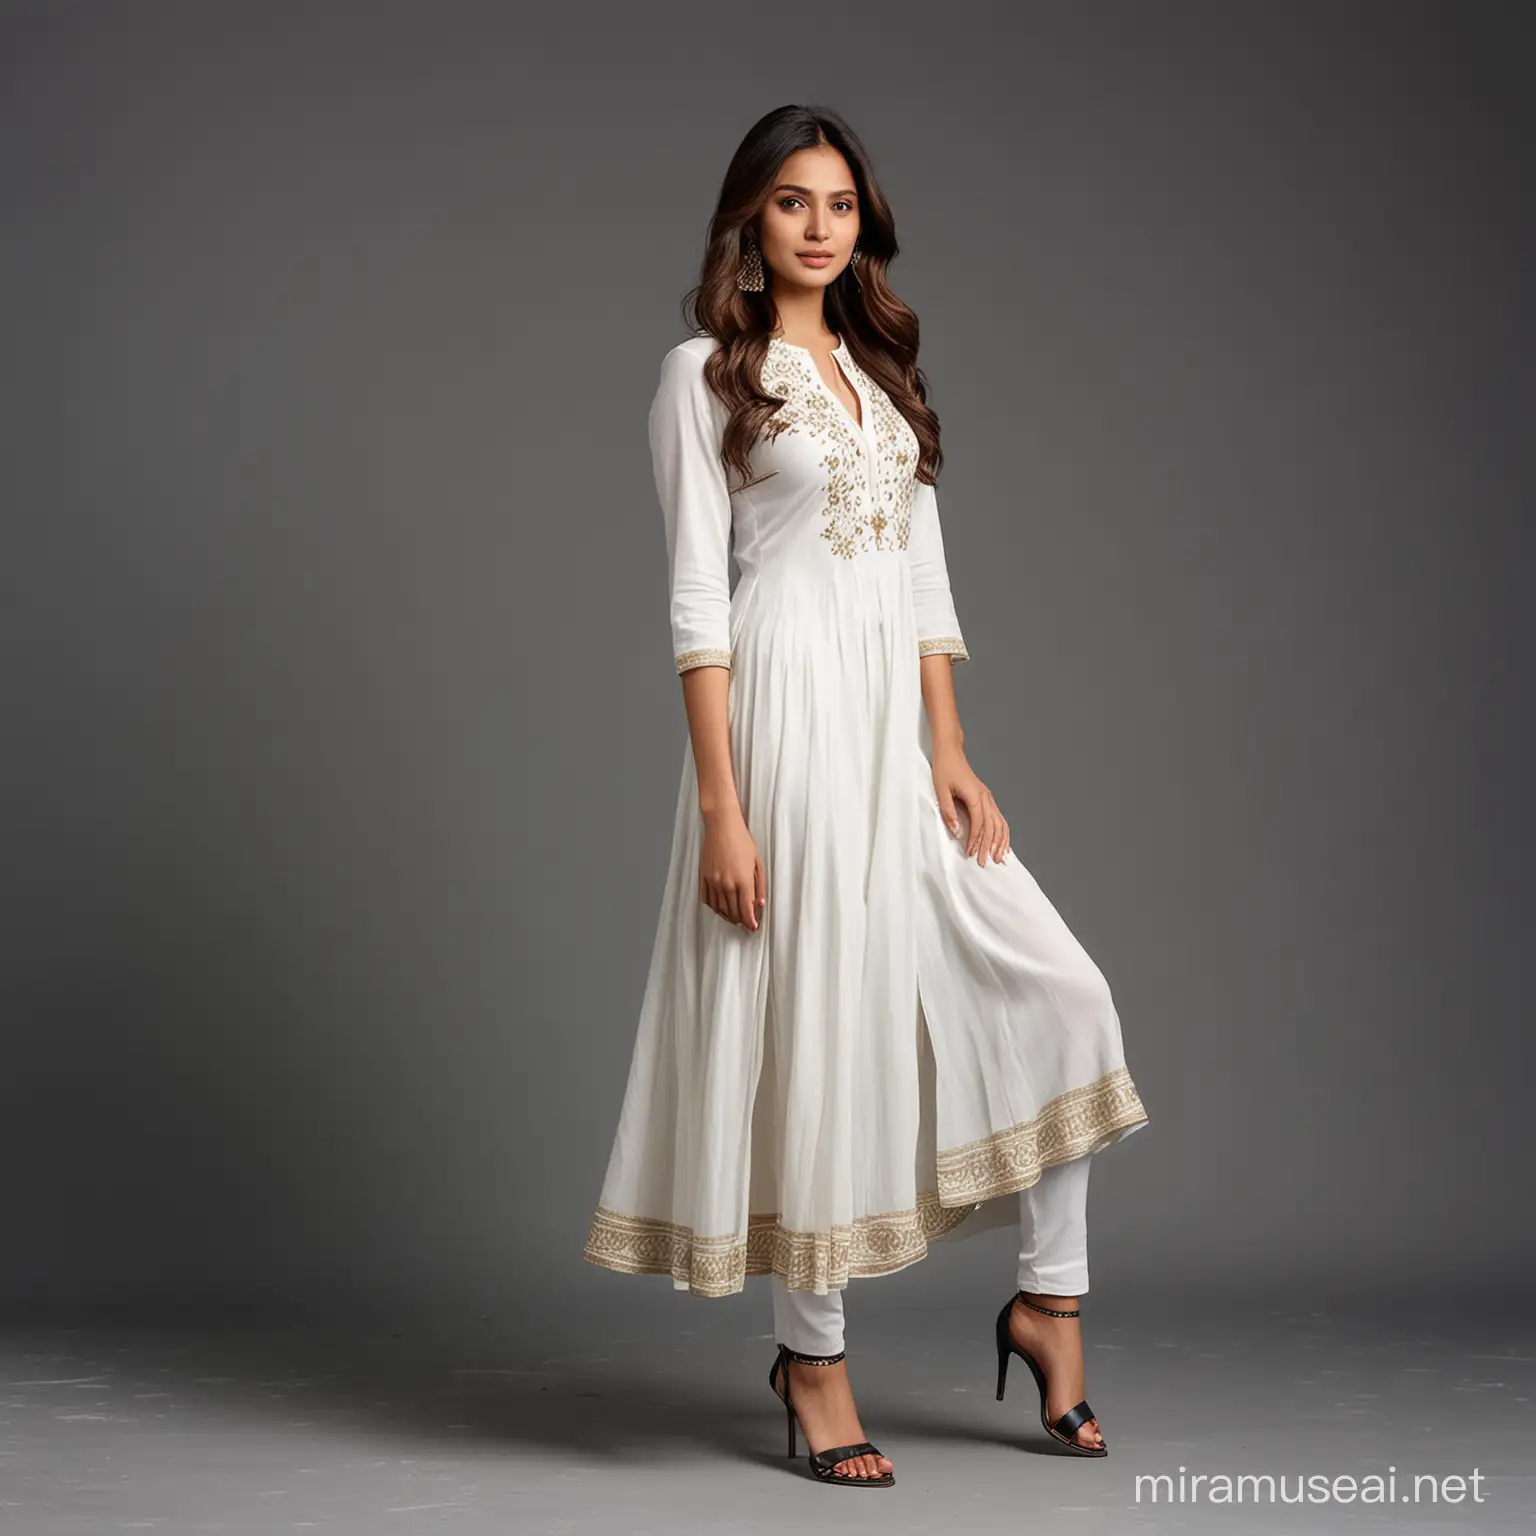 Stylish Smart Model in White Eastern Dress on Dark Grey Background